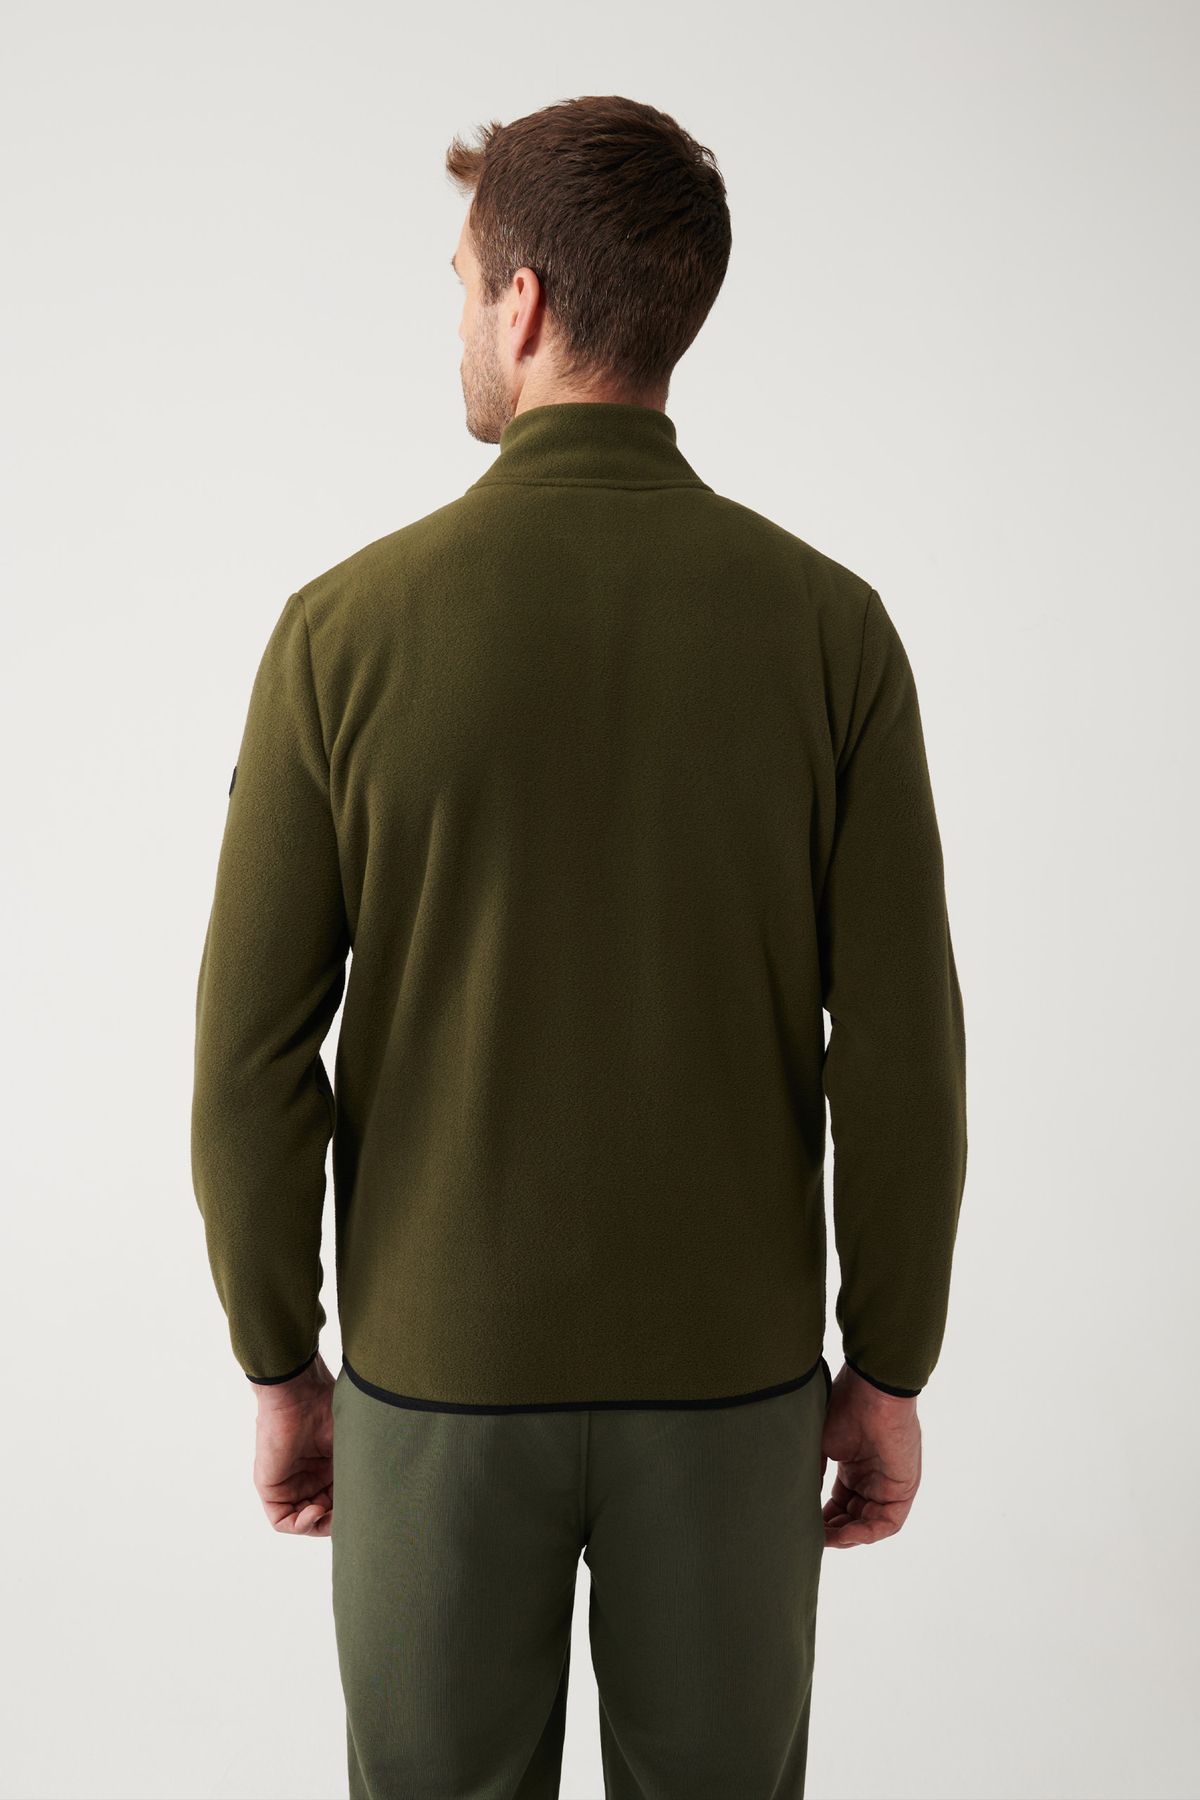 Avva زیپ یقه ایستاده خاکی مردانه مقاوم در برابر سرما با تناسب استاندارد ژاکت پشمی برش معمولی E001069